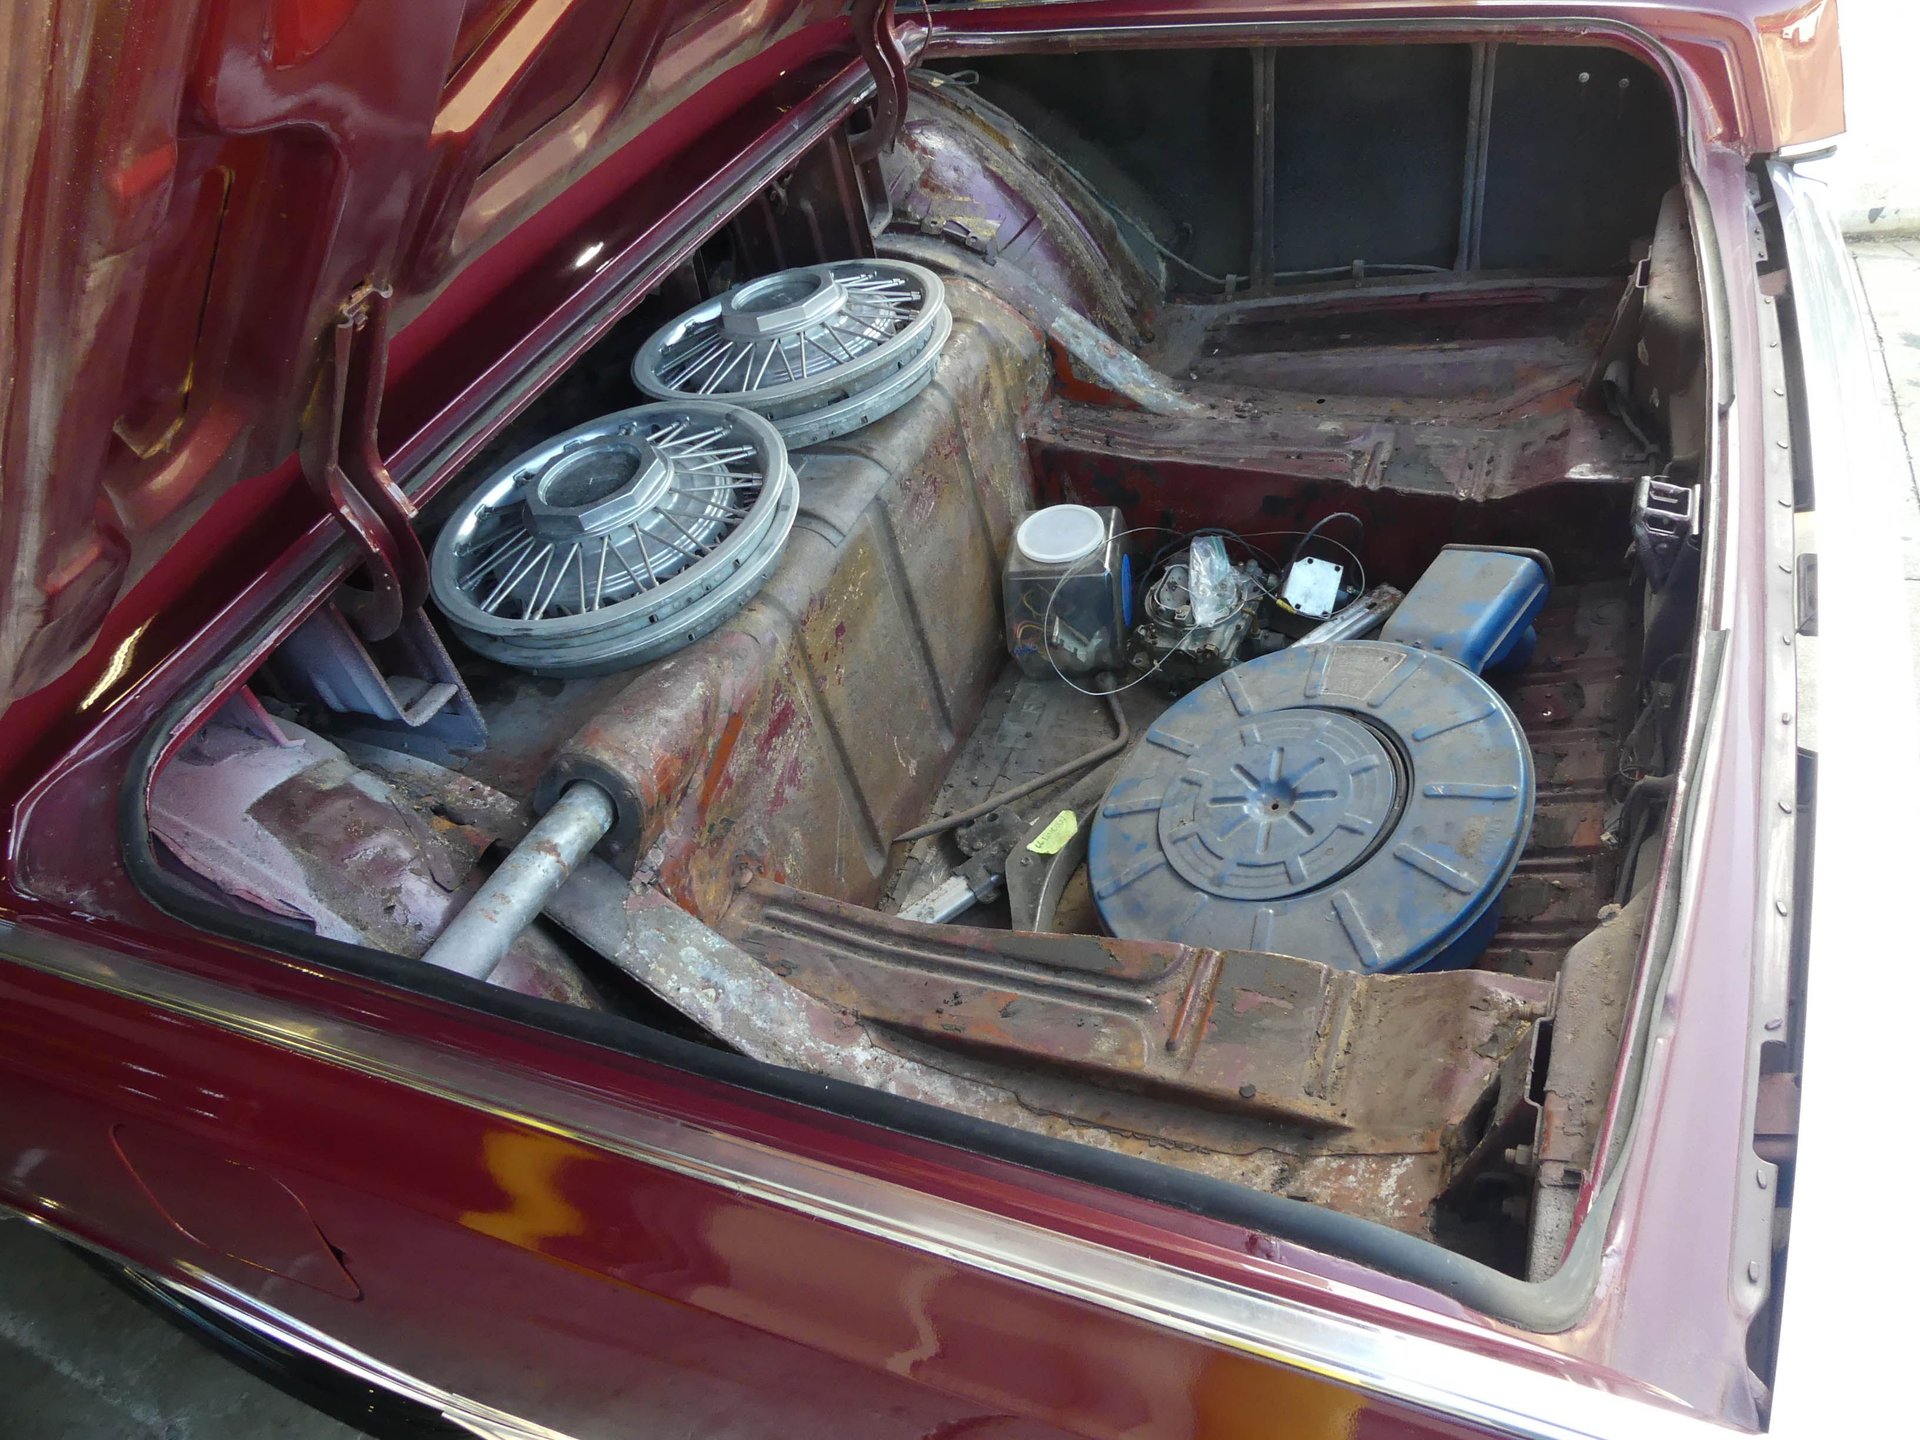 0767-TAMPA | 1966 Lincoln Continental 2-Door Hardtop | Survivor Classic Cars Services